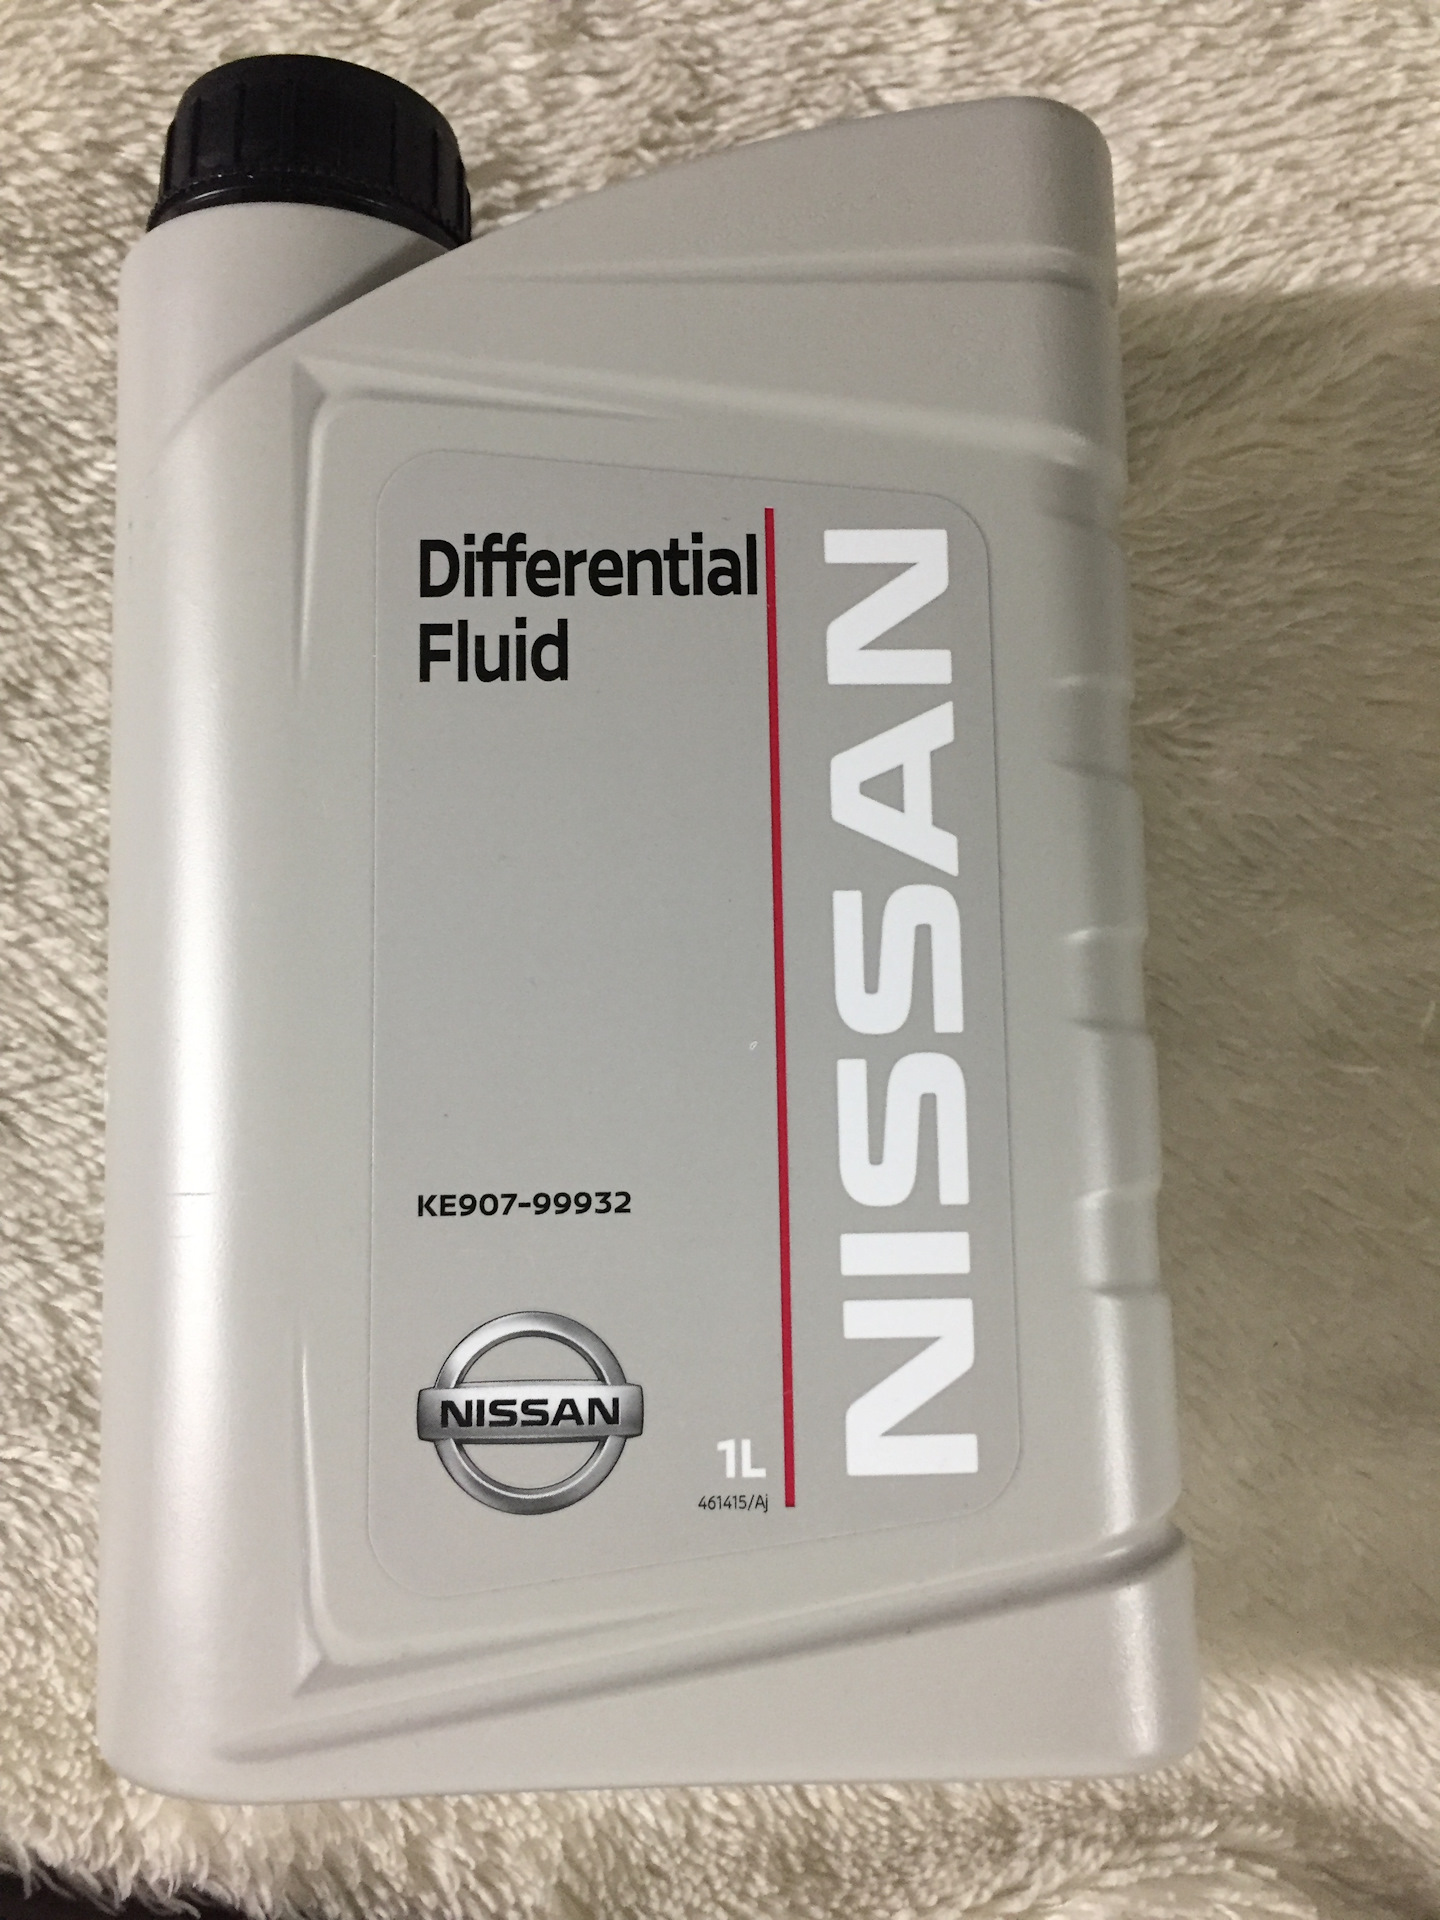 Масло nissan atf. ATF Nissan matic j 5л. Nissan ATF matic j Fluid. Nissan Differential Fluid(ke907-99932). Ke907-99932 gl-5 80w90.